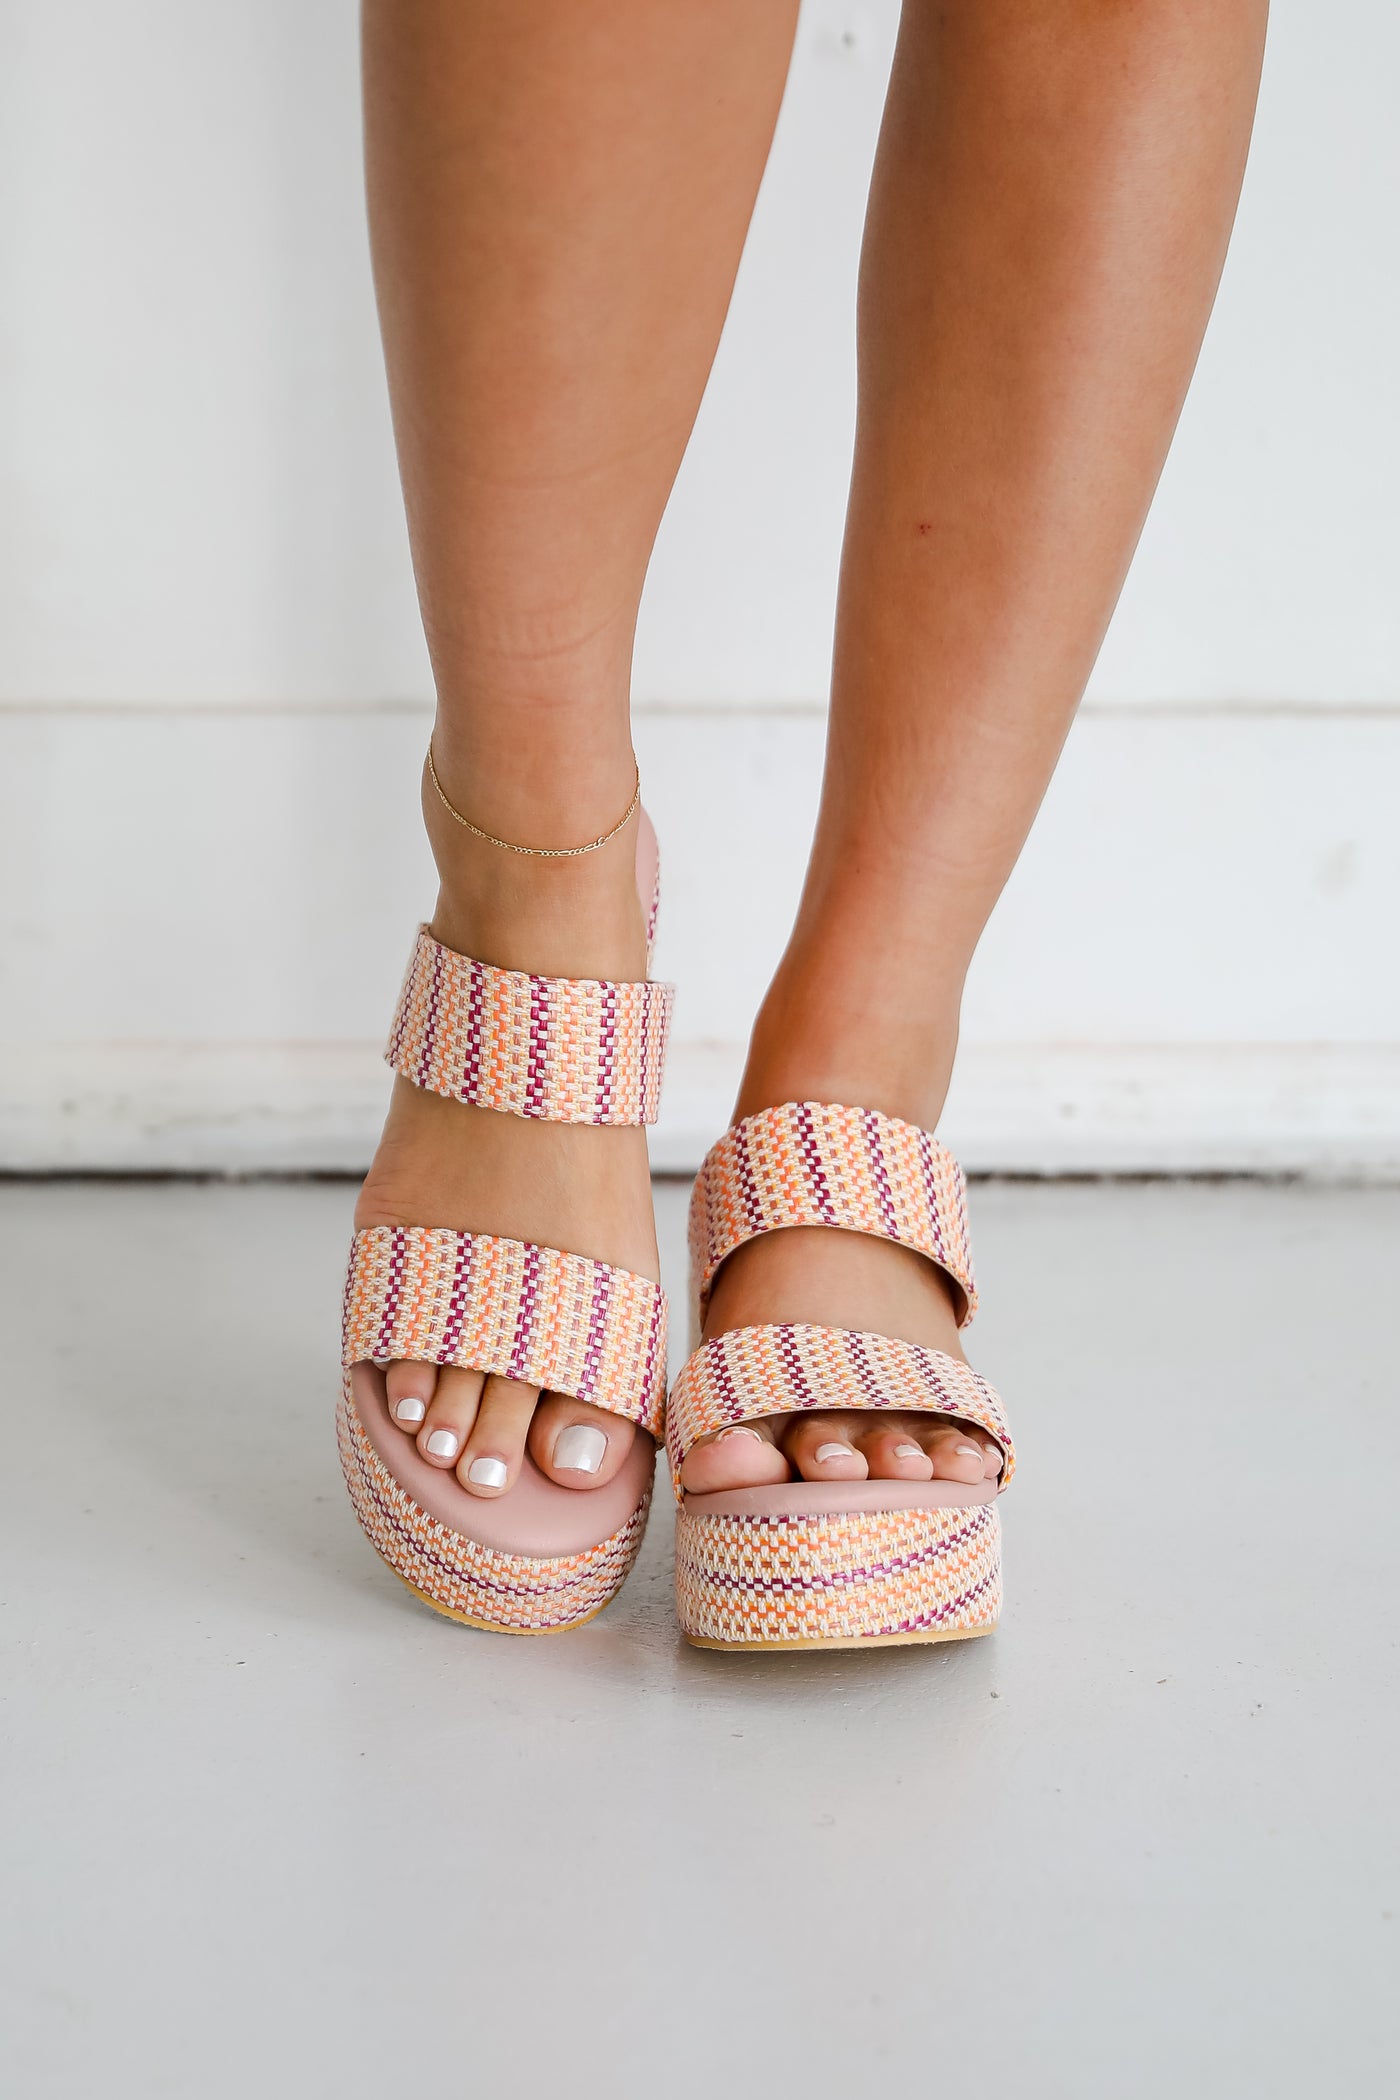 cute sandals for women